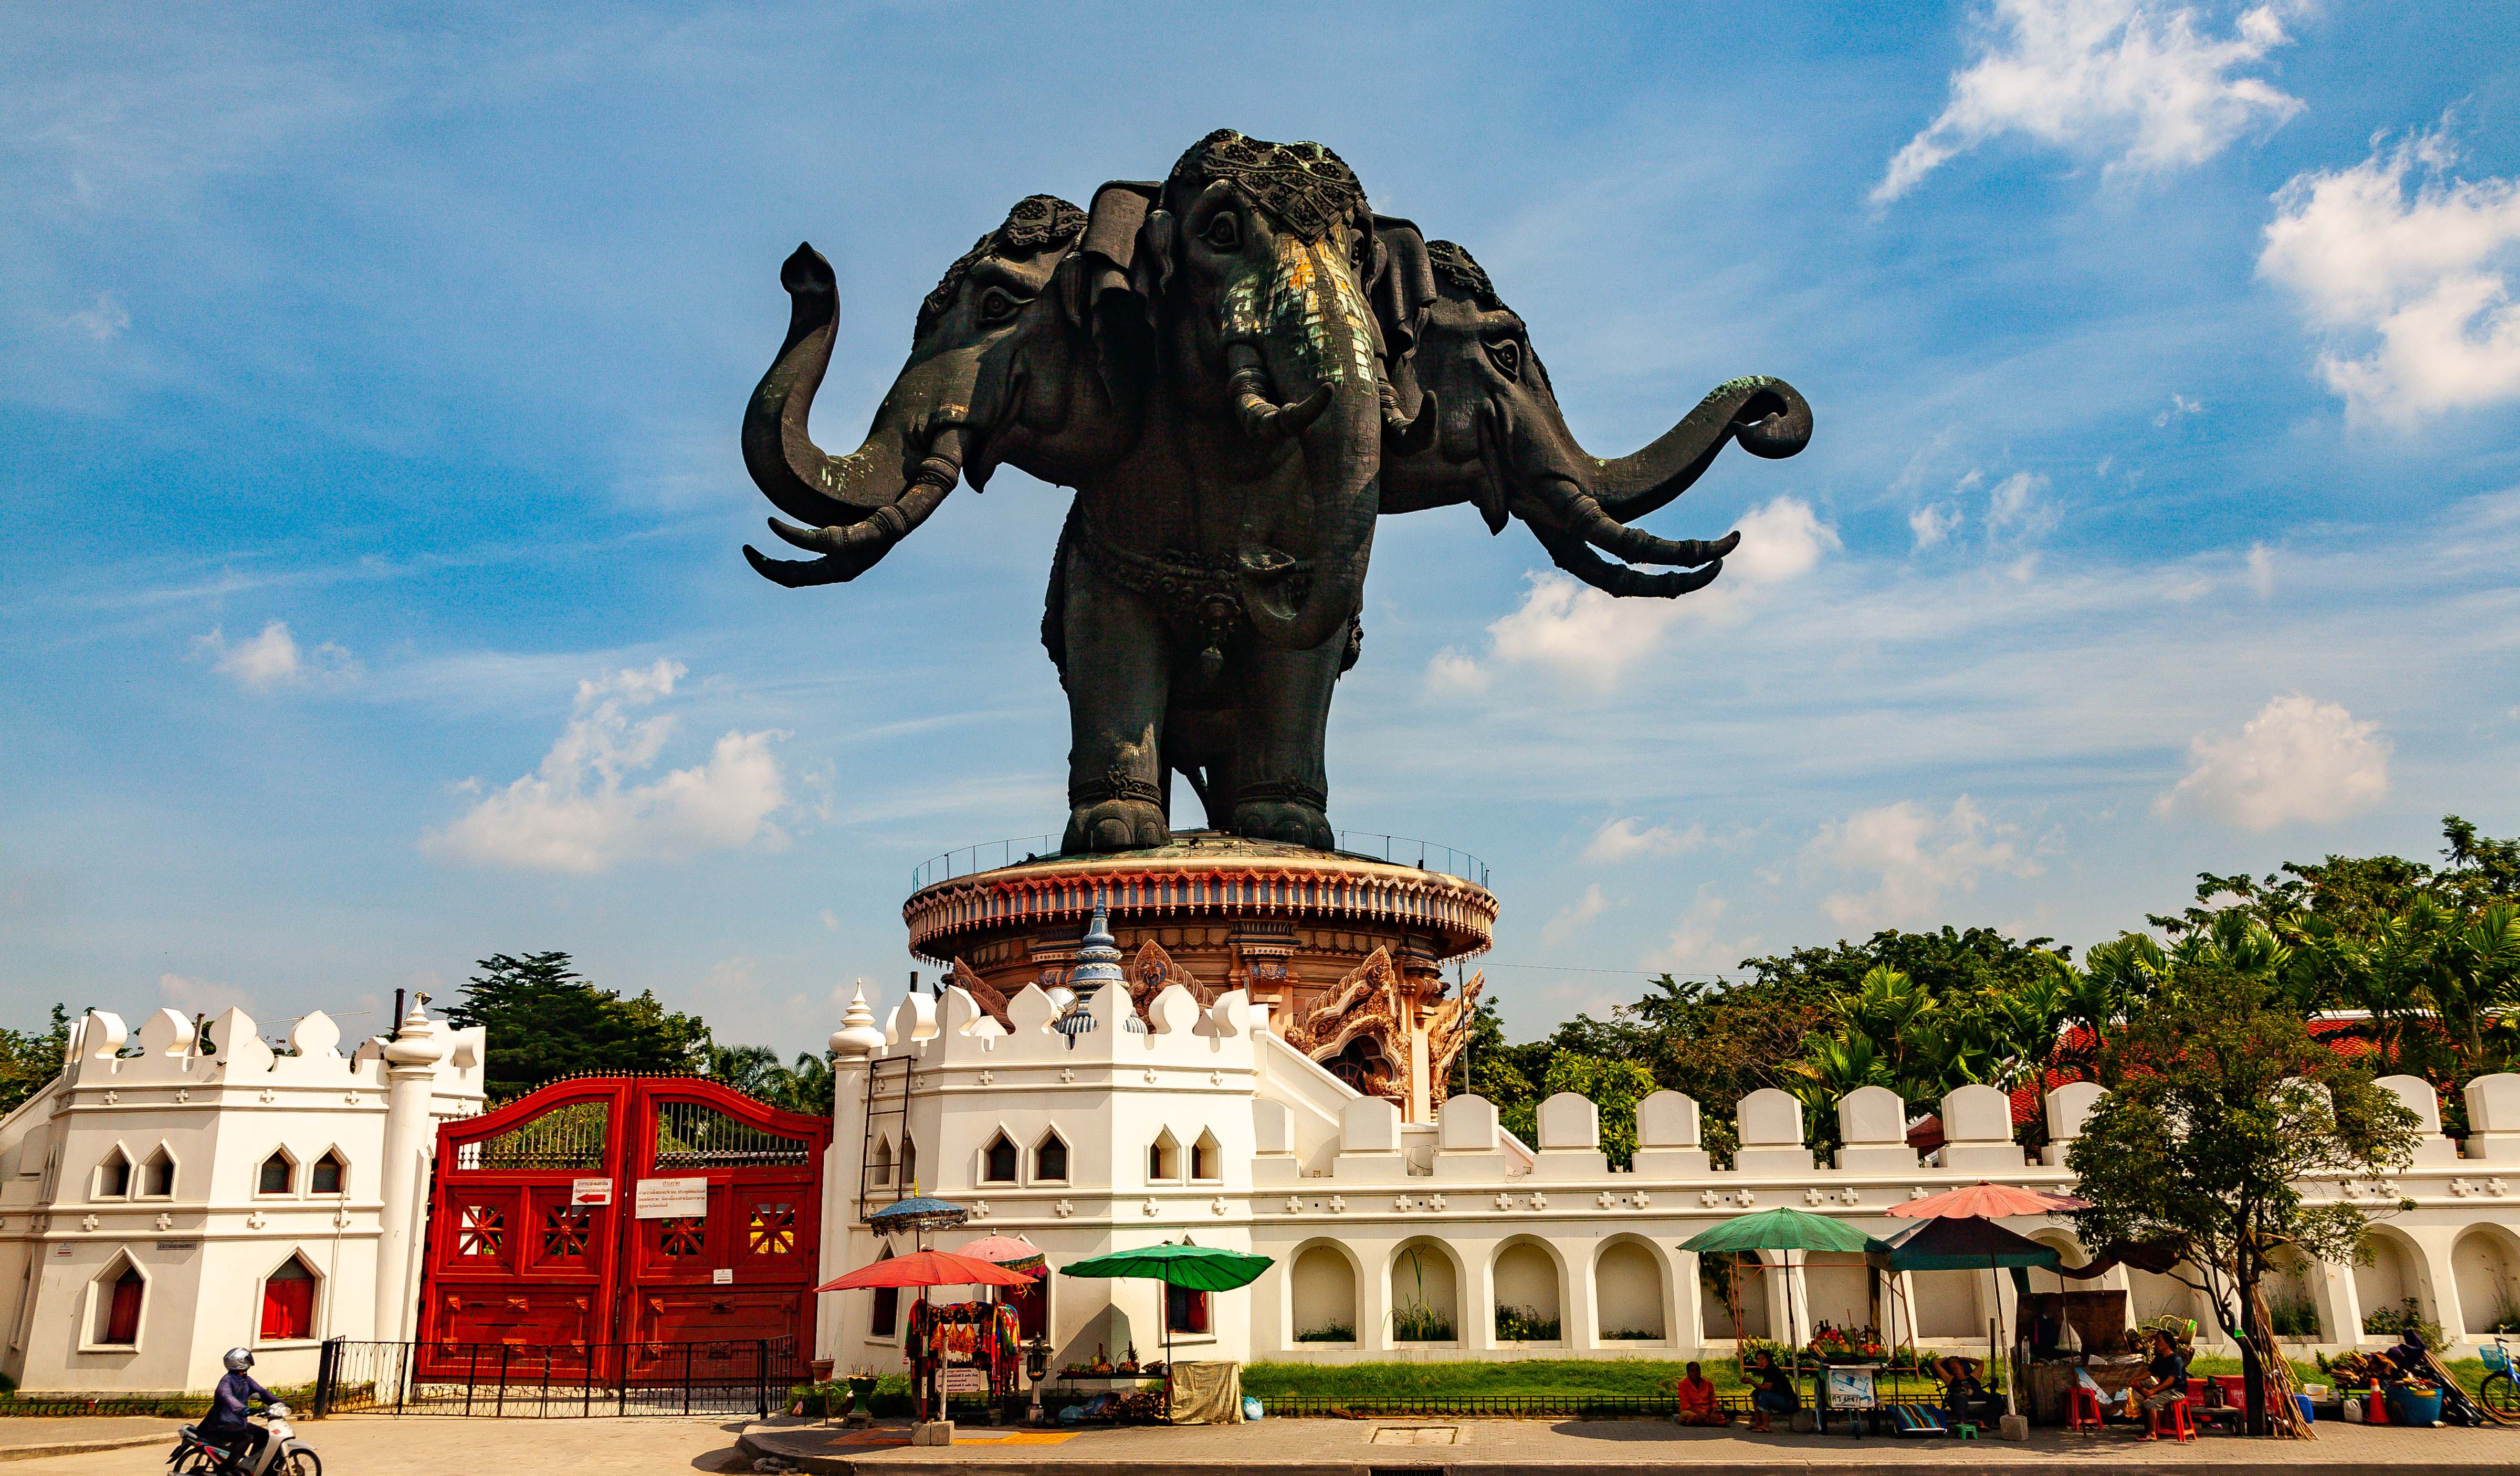 Thailand, Samut Prakan Prov, Elephant Statue, 2008, IMG 1169